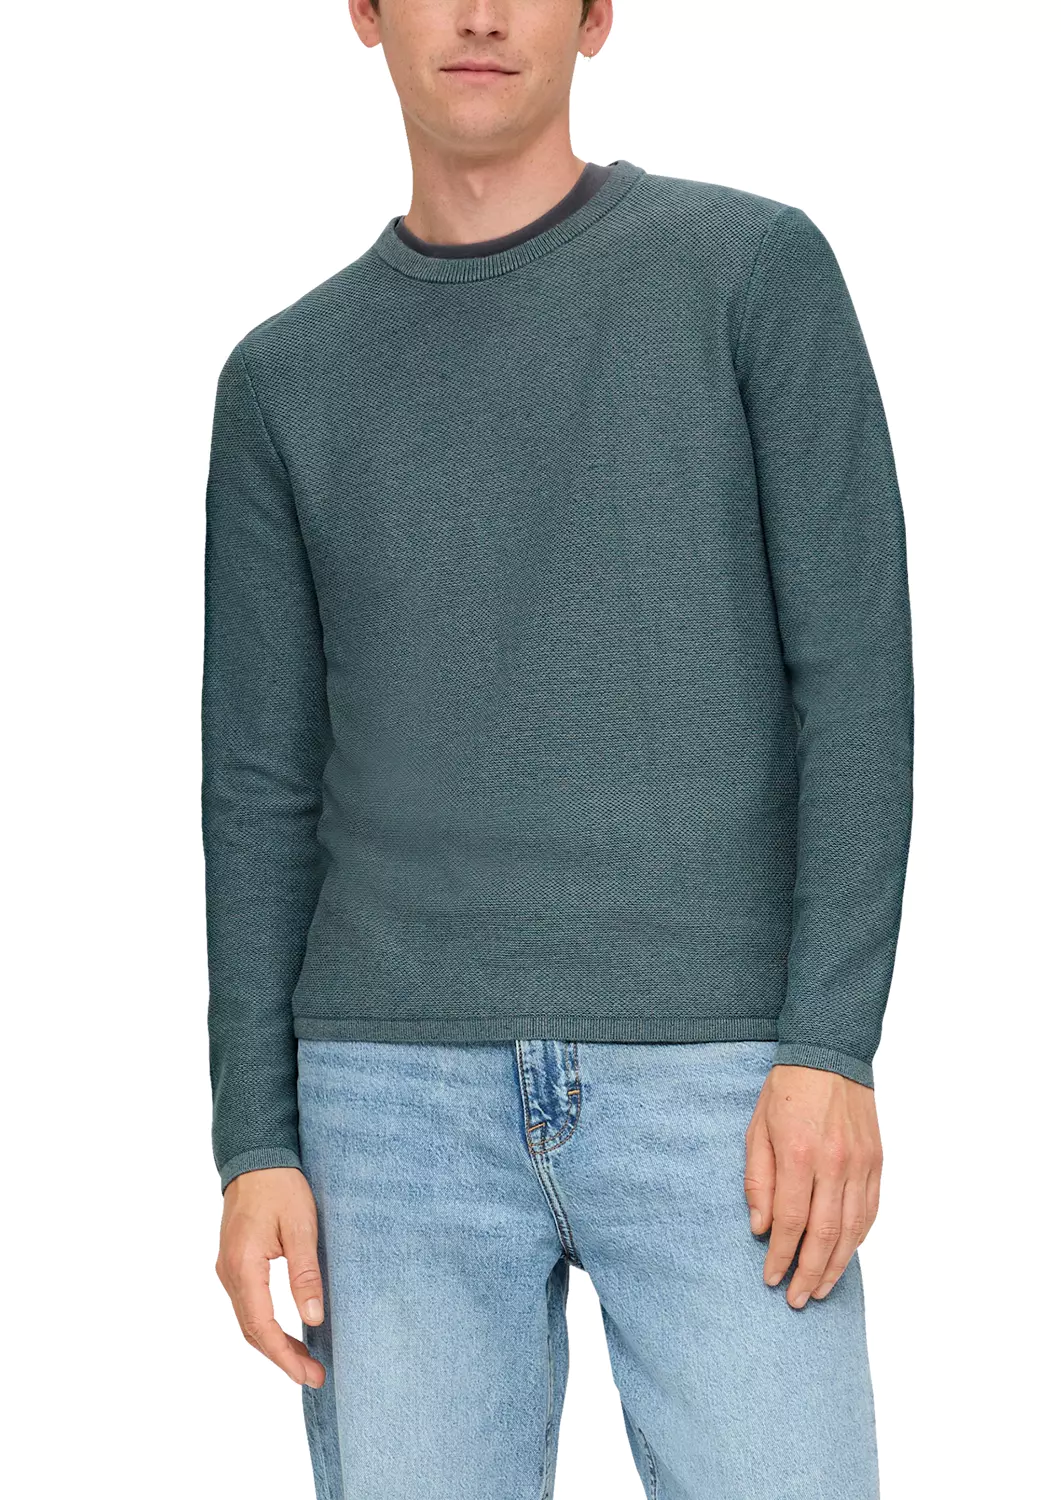 Пуловер мужской QS by s.Oliver 50.3.51.17.170.2134570*63W0*S петроль, размер S